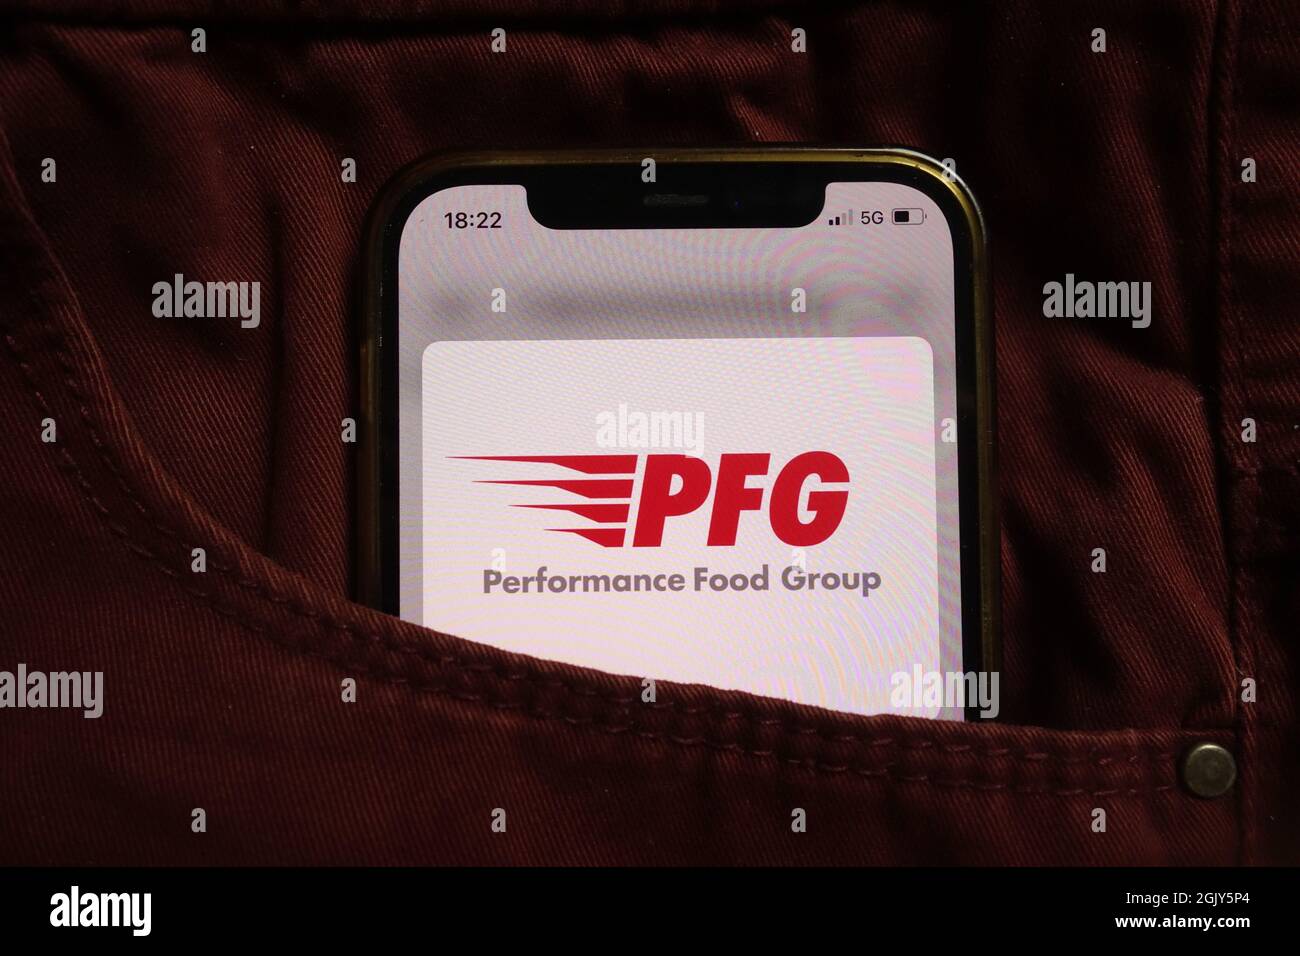 KONSKIE, POLAND - September 04, 2021: Performance Food Group Company PFG logo displayed on mobile phone hidden in jeans pocket Stock Photo